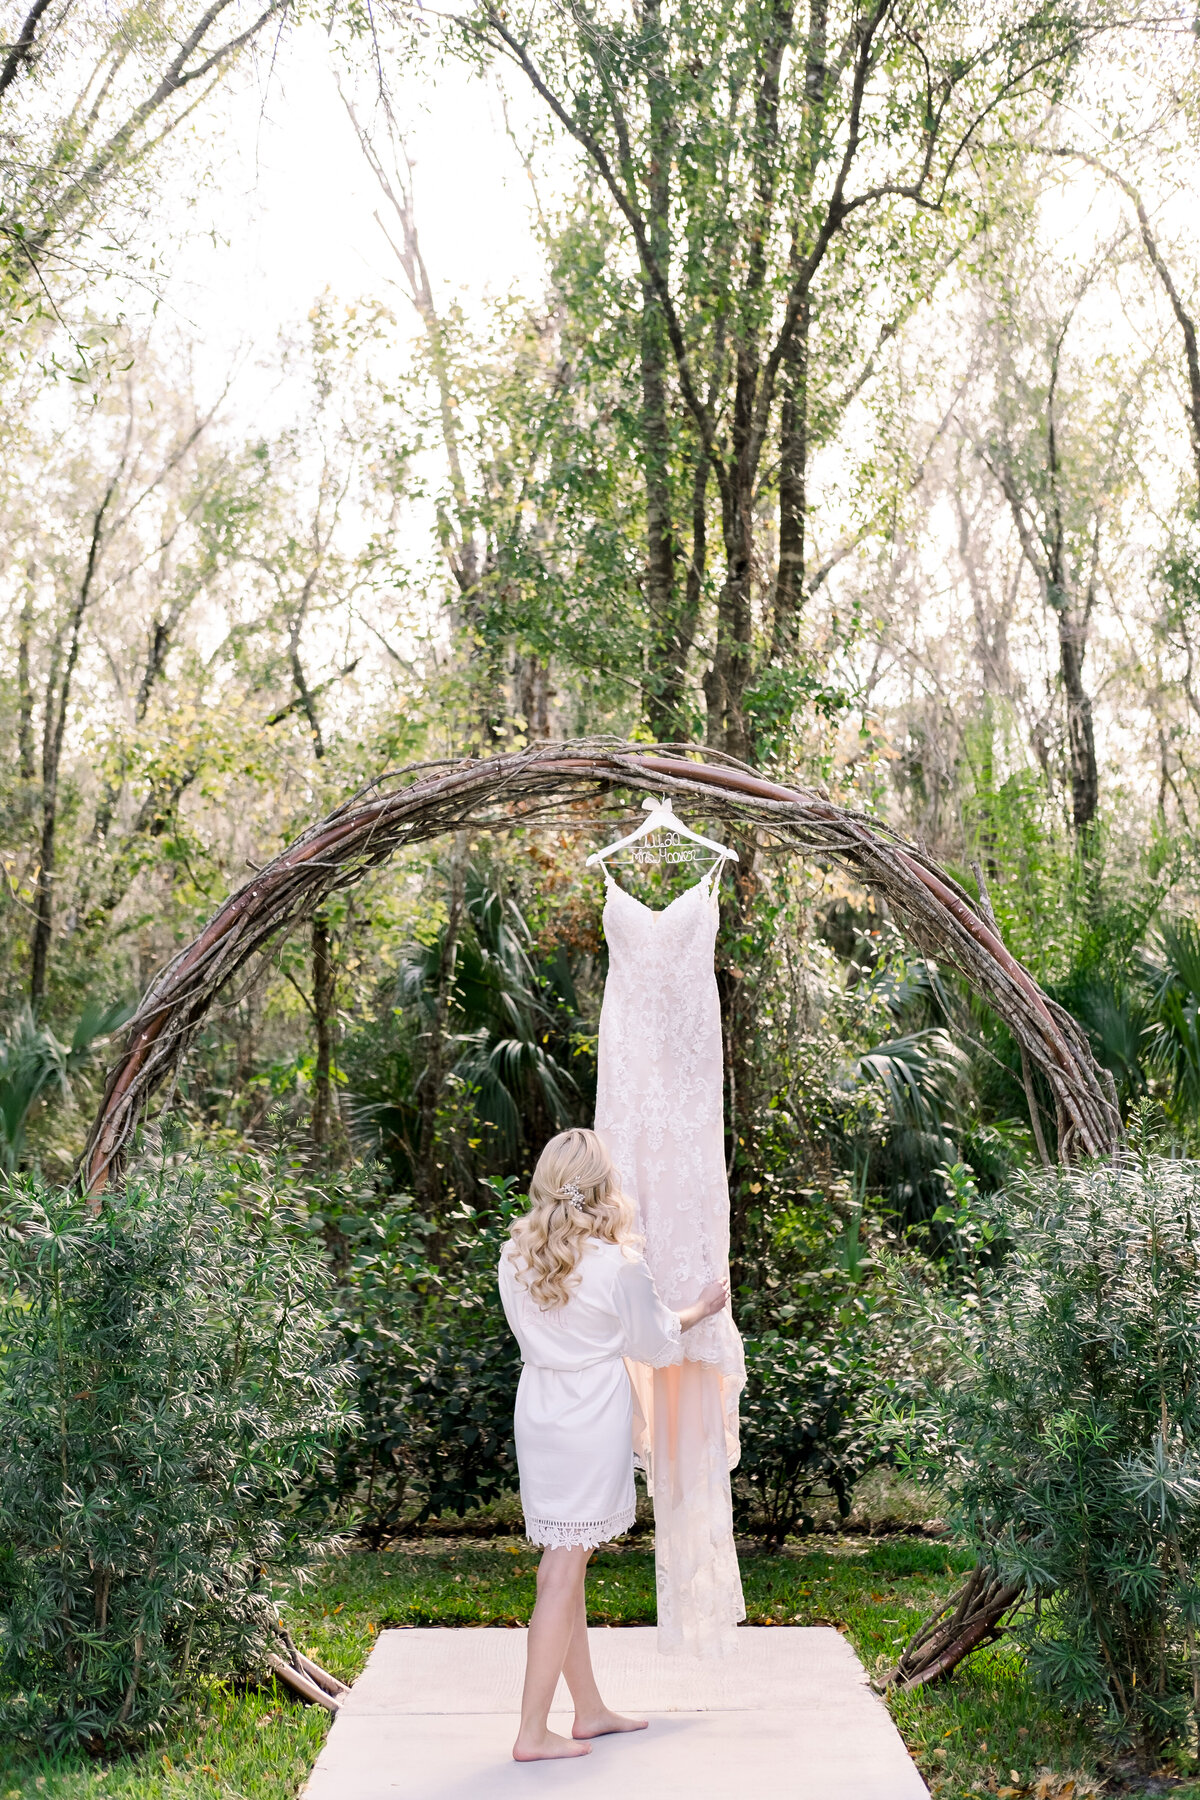 Bride adjusting her wedding dress on the hanger under a woven tree branch arch in Sarasota, FL